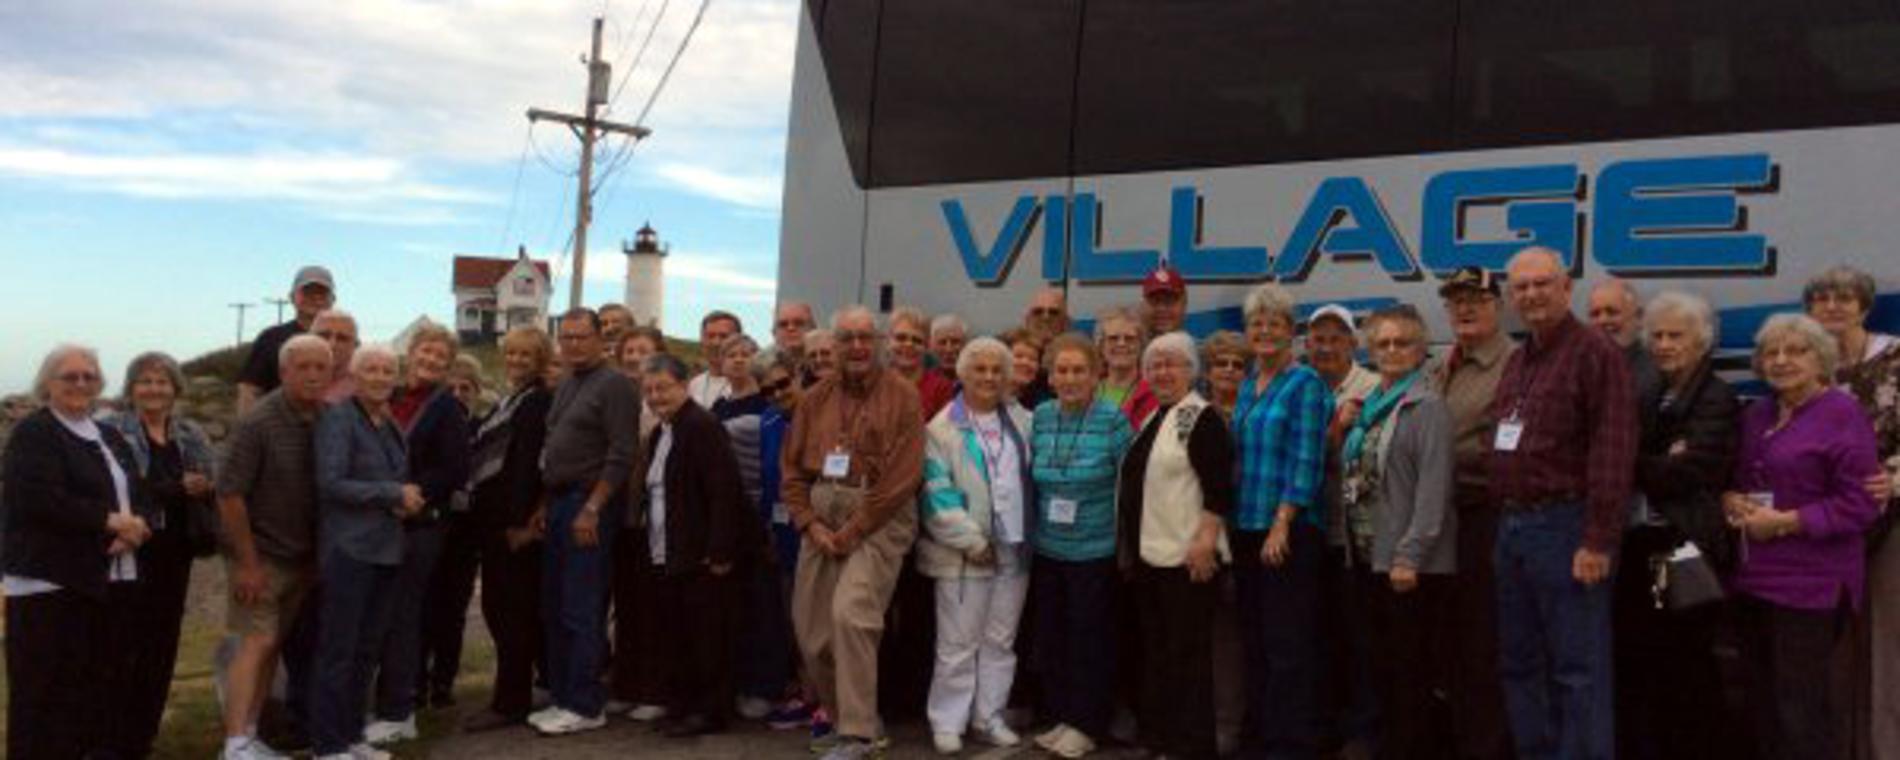 Bus Group Lighthouse Visit Wichita